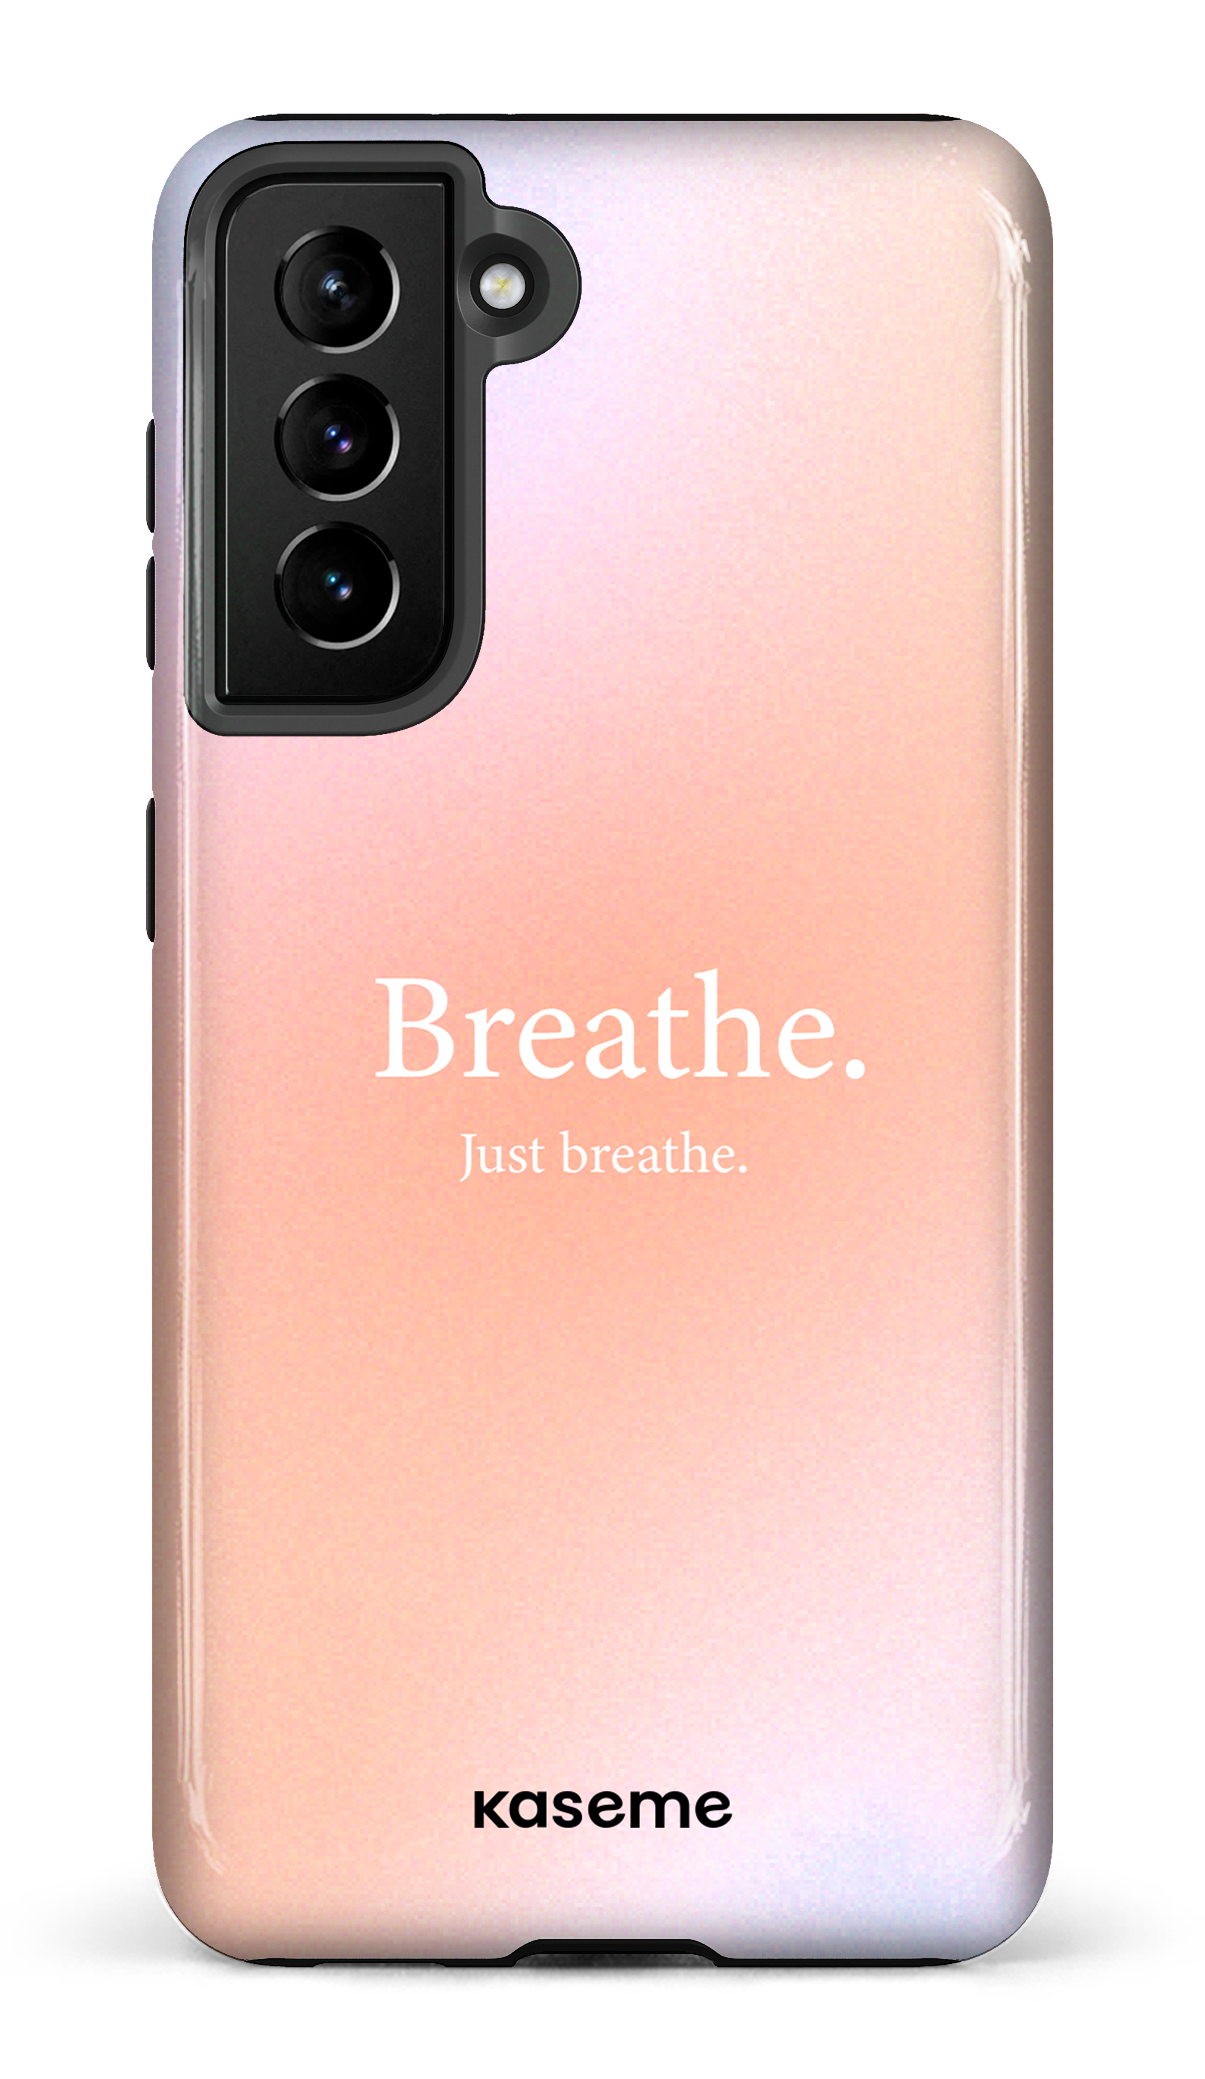 Just breathe - Galaxy S21